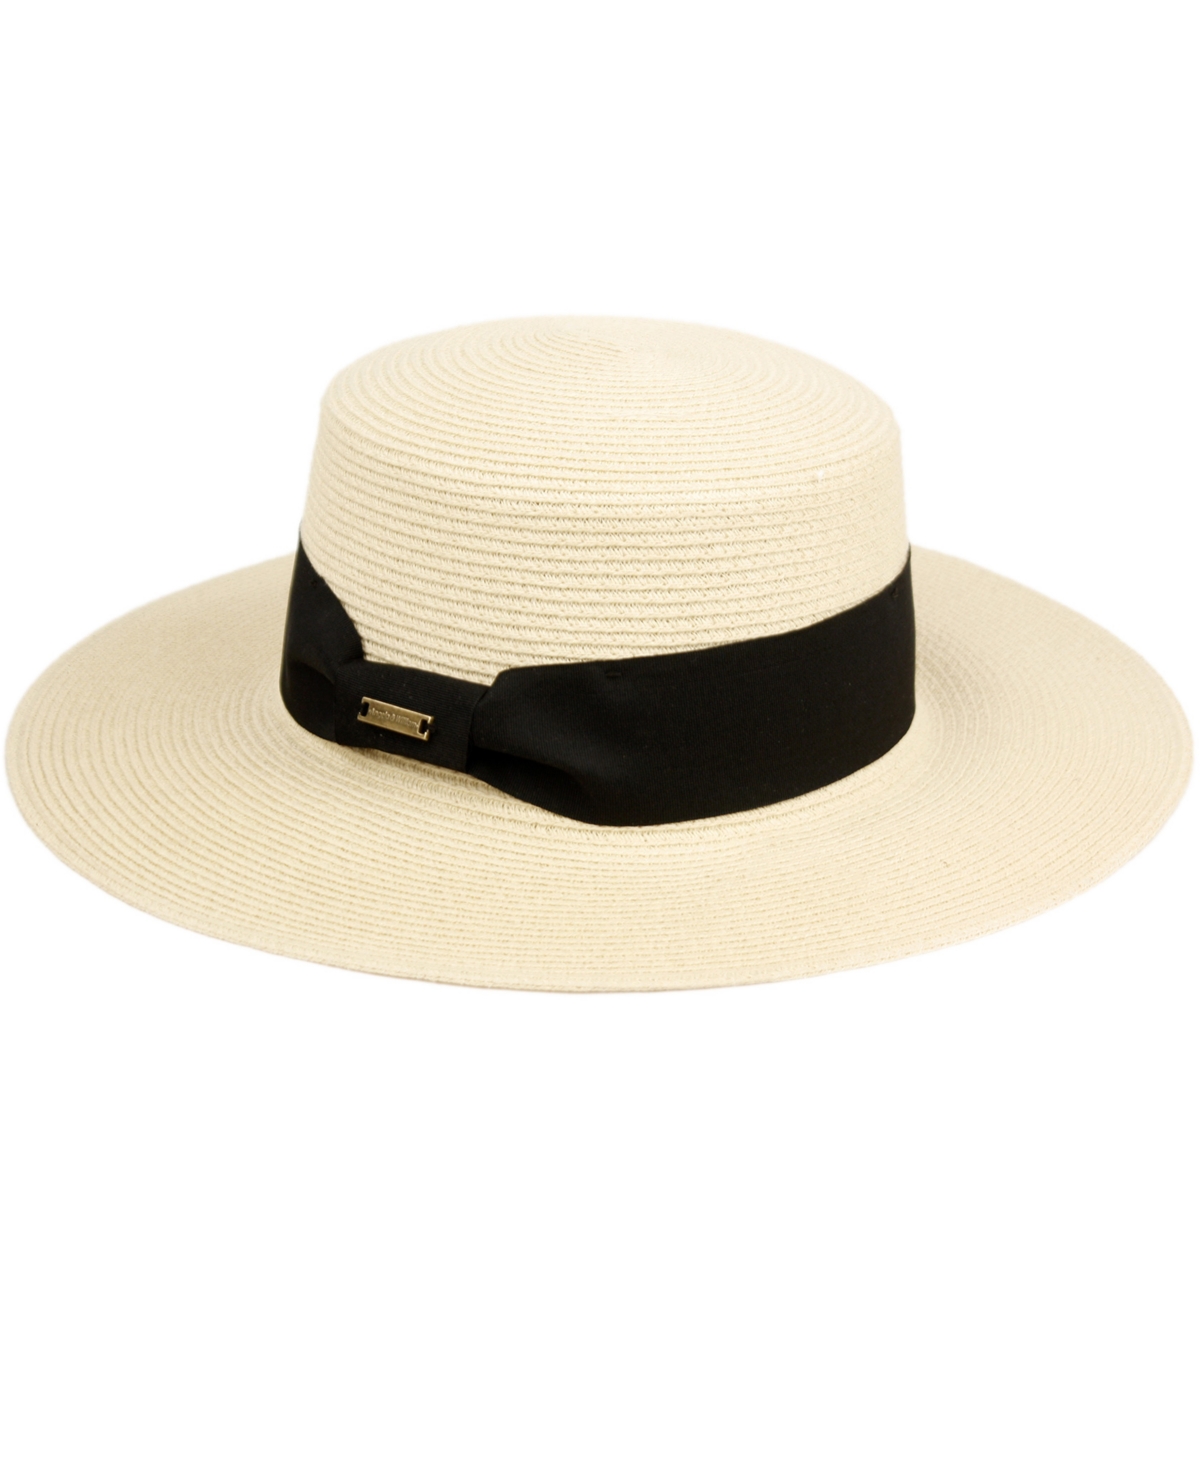 Unisex Flat Brim Boater Straw Sun Hat - Light Brown